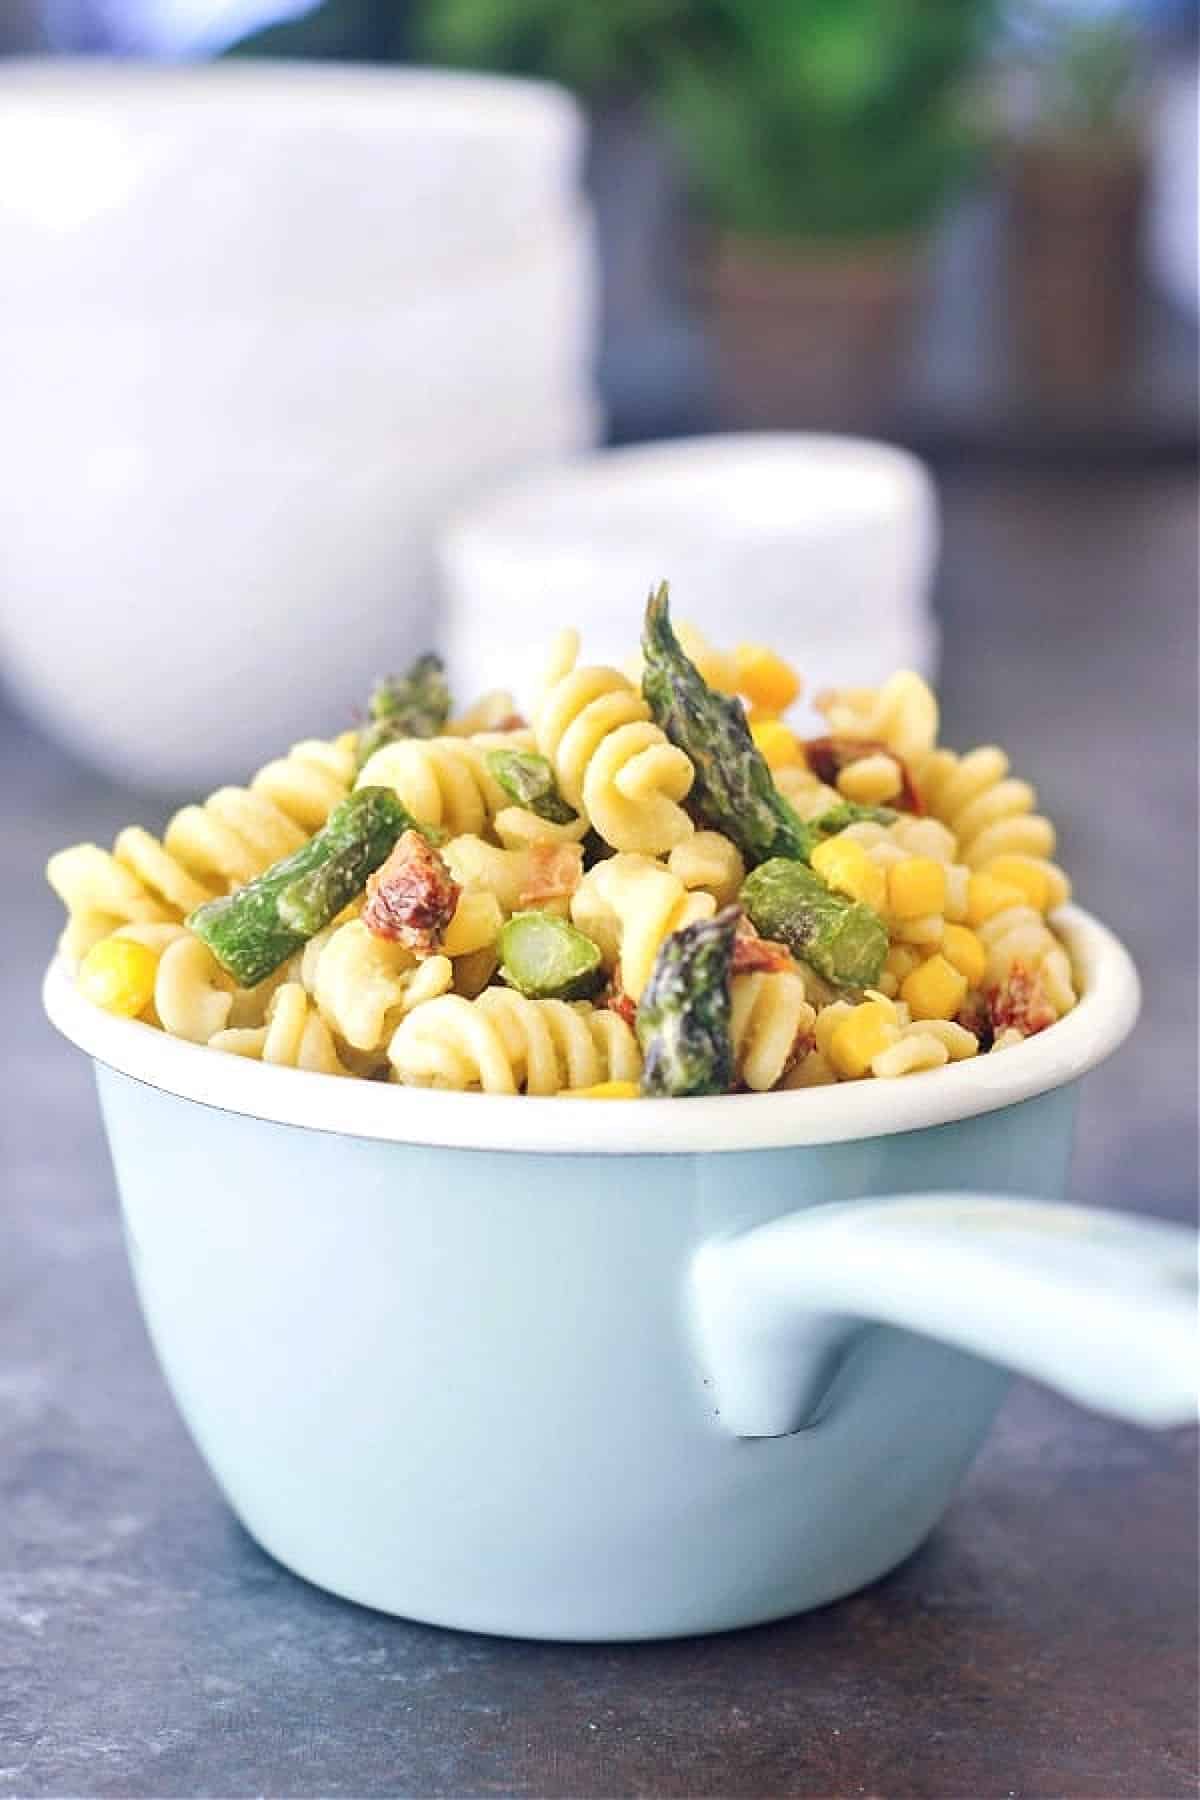 Vegan pasta salad (corkscrew pasta with sliced asparagus, fresh corn kernels, sundried tomatoes, avocado dressing) in a light blue long handled serving bowl.